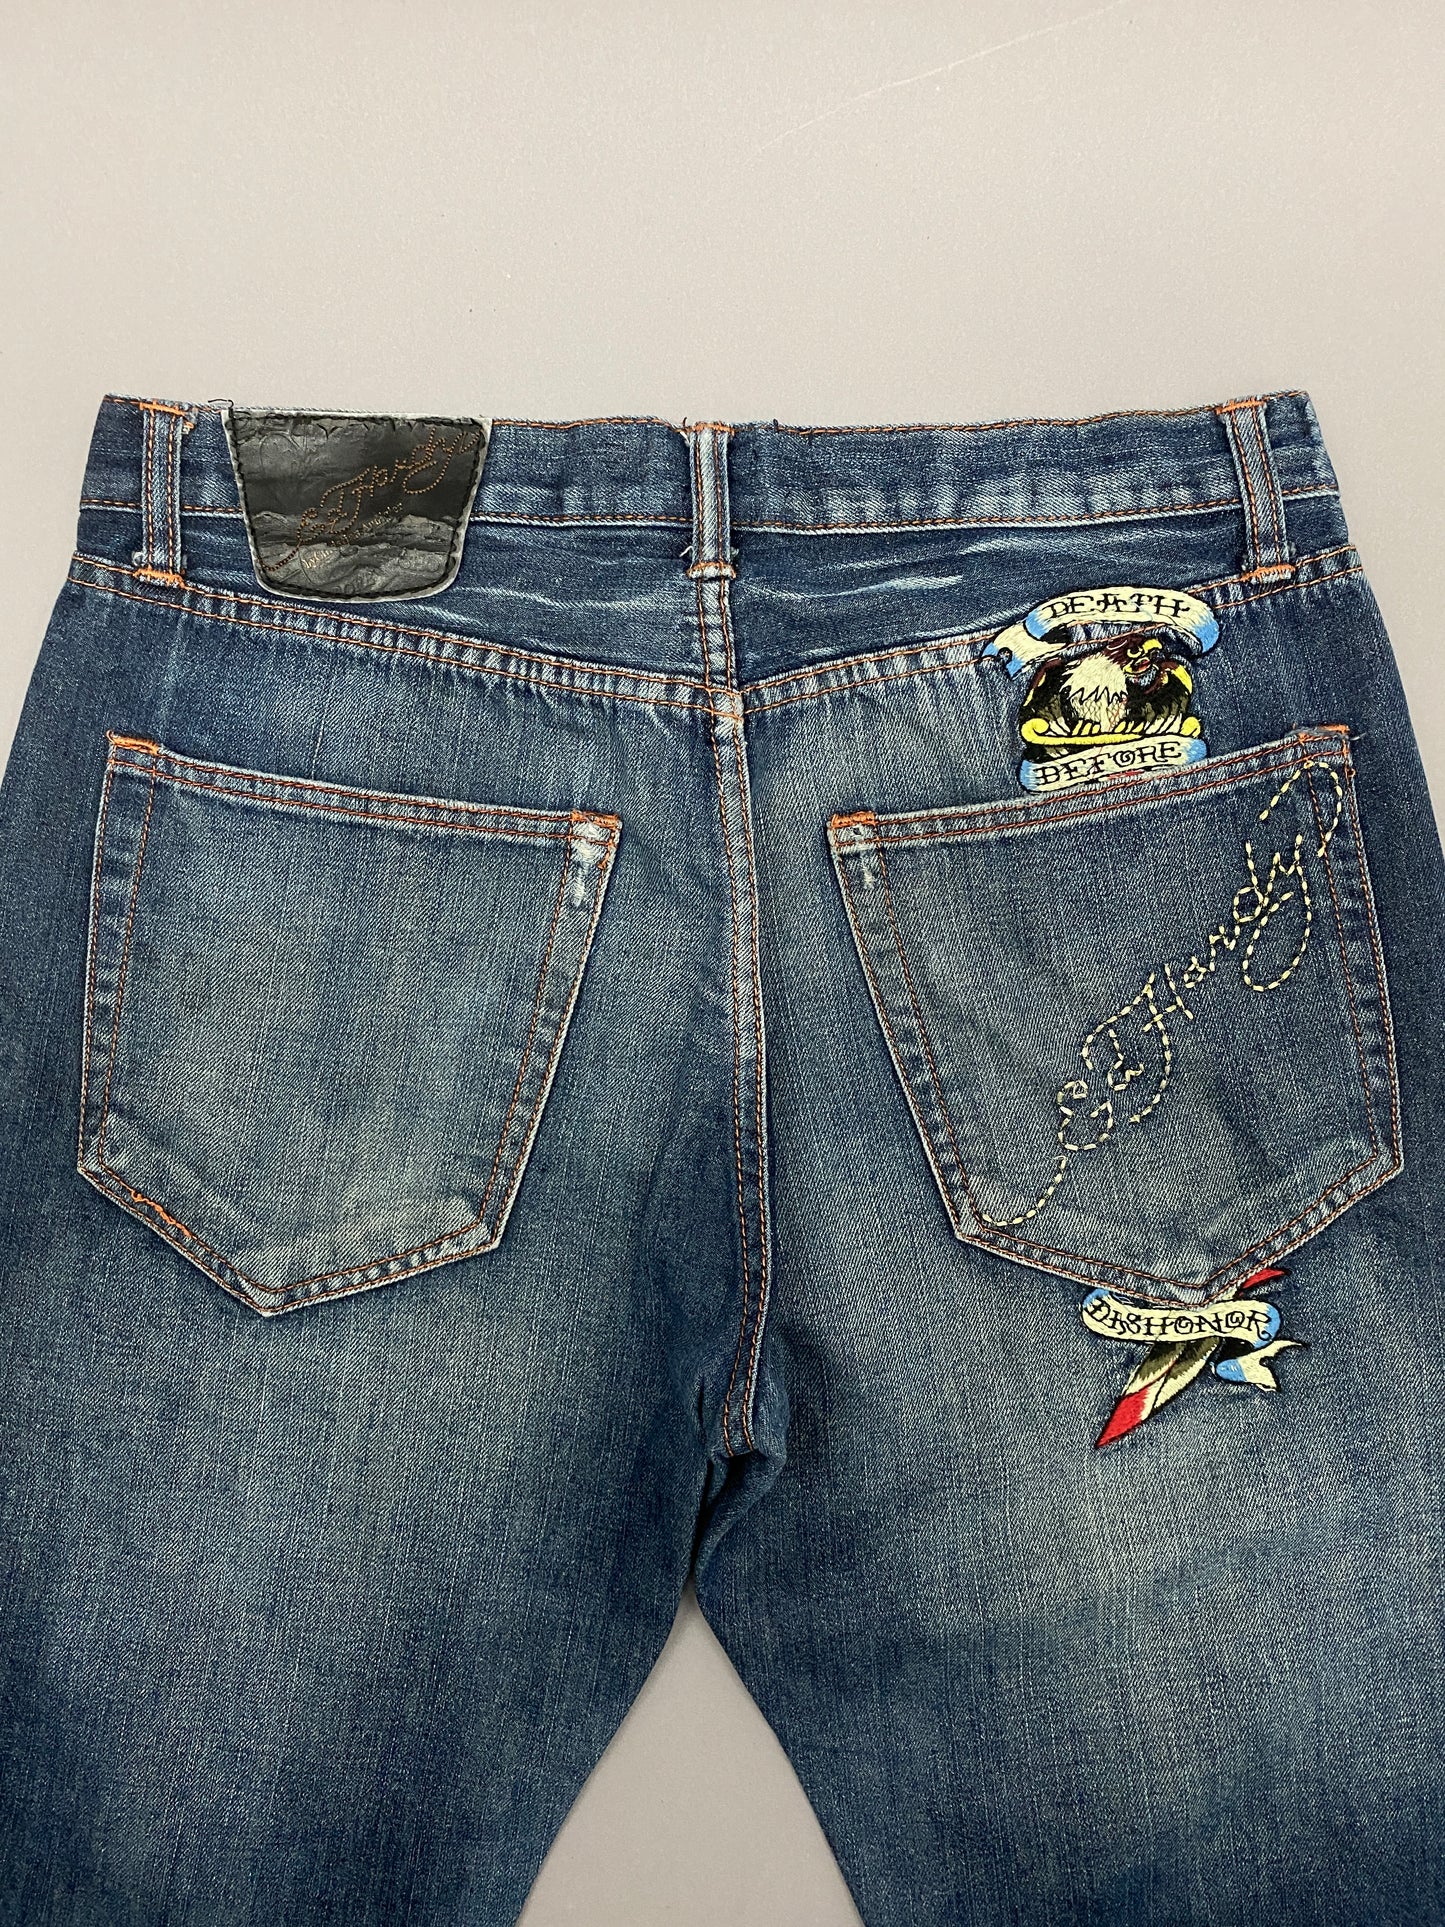 Vintage Ed Hardy Jeans - 32